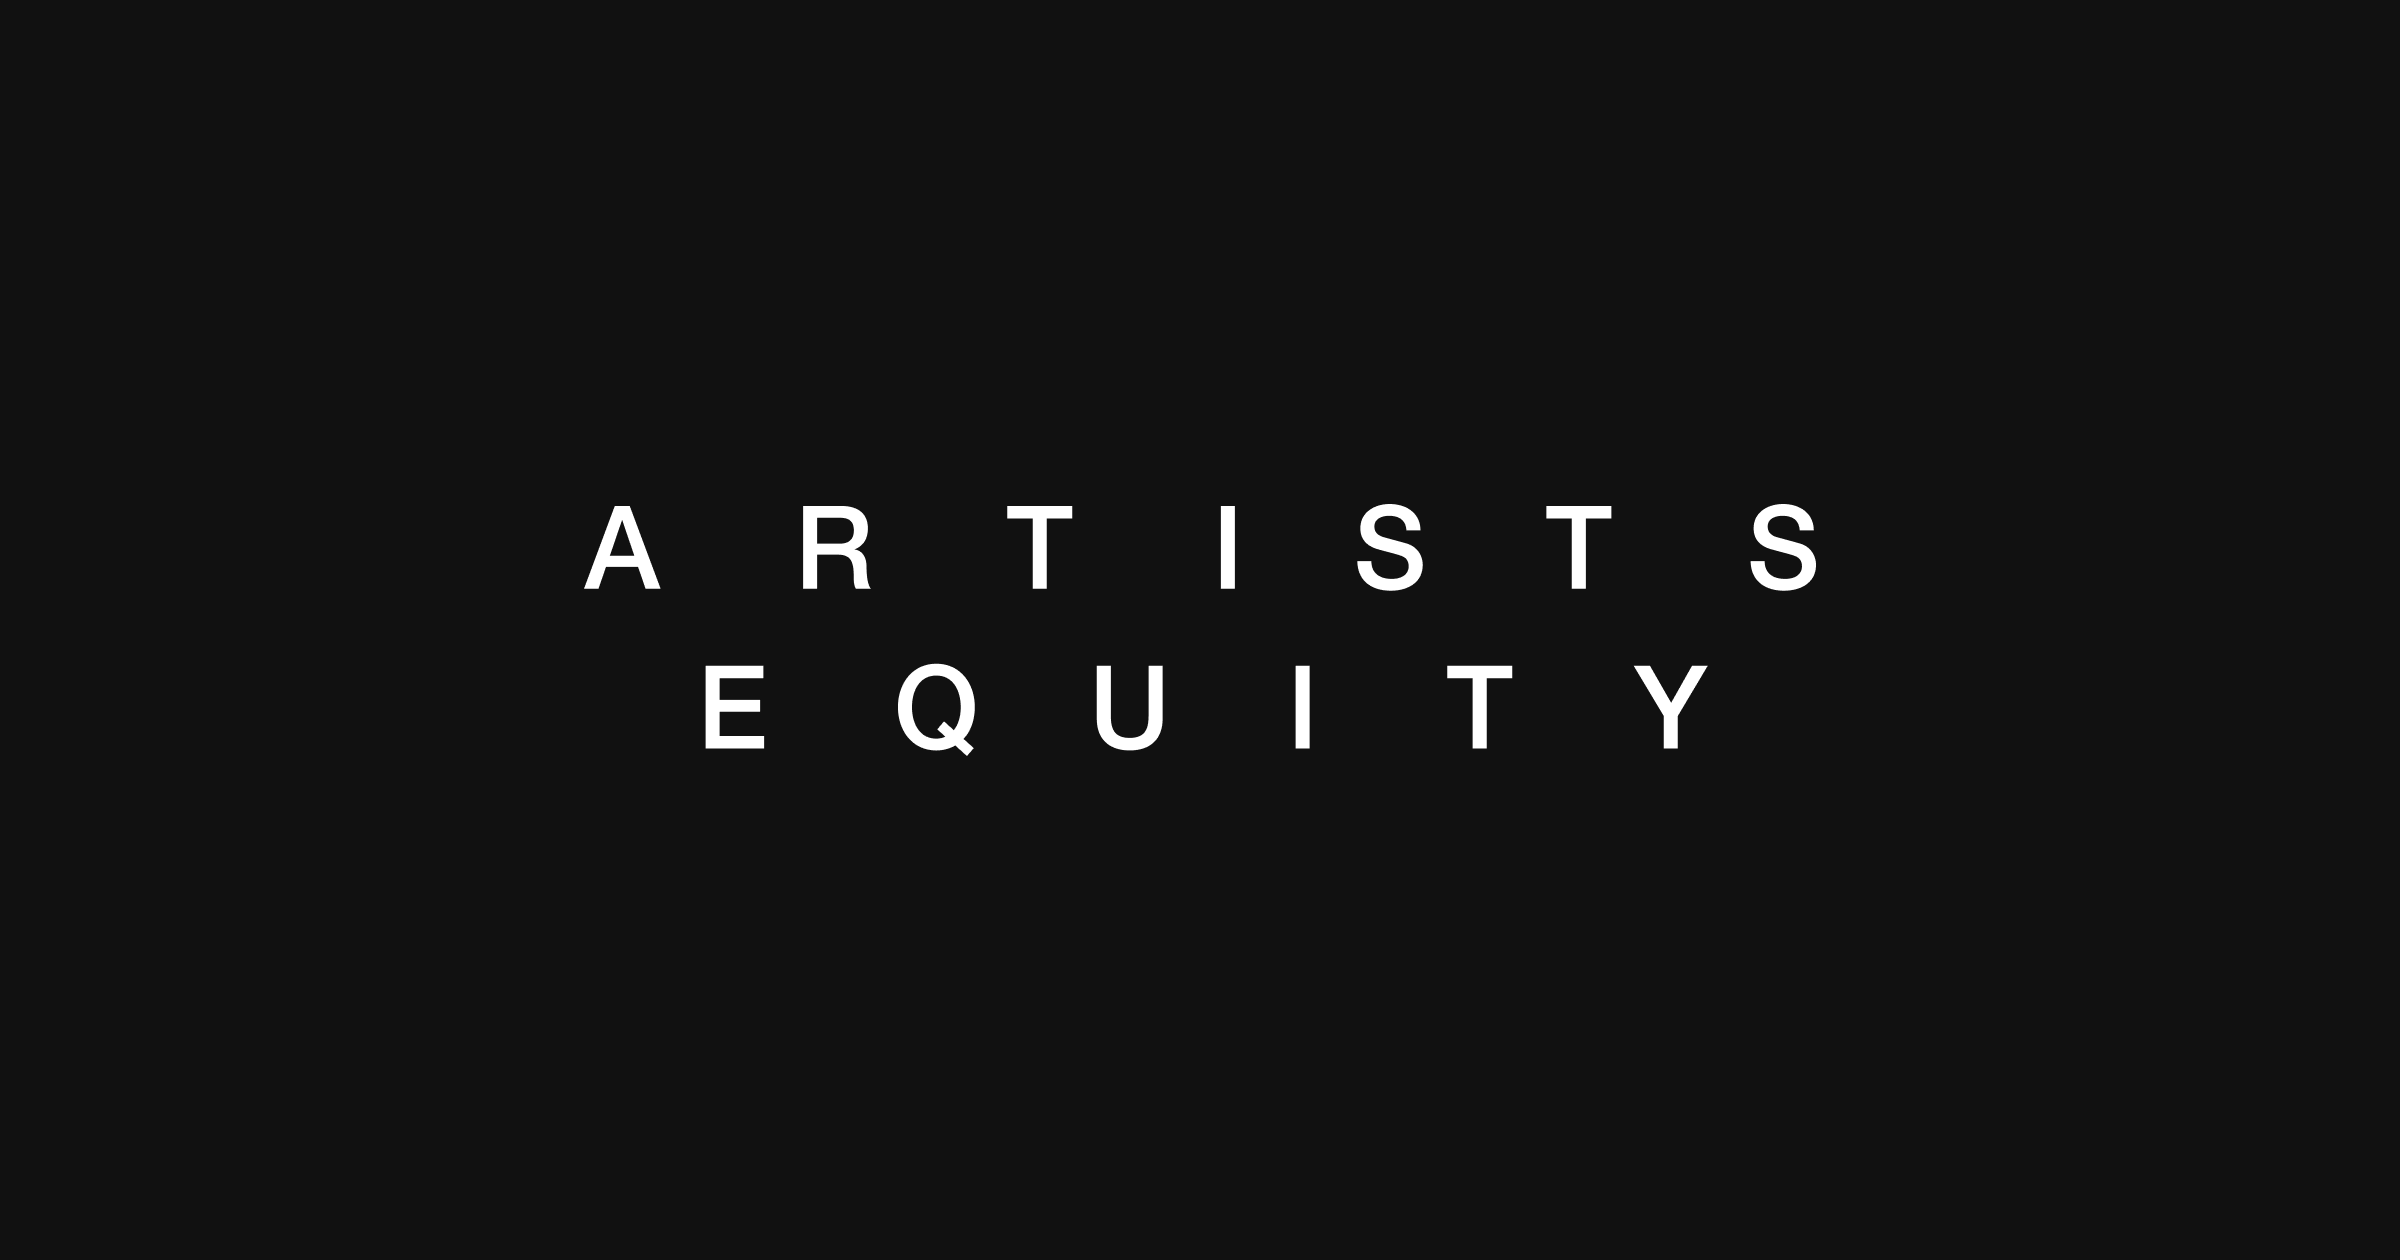 (c) Artistsequity.com